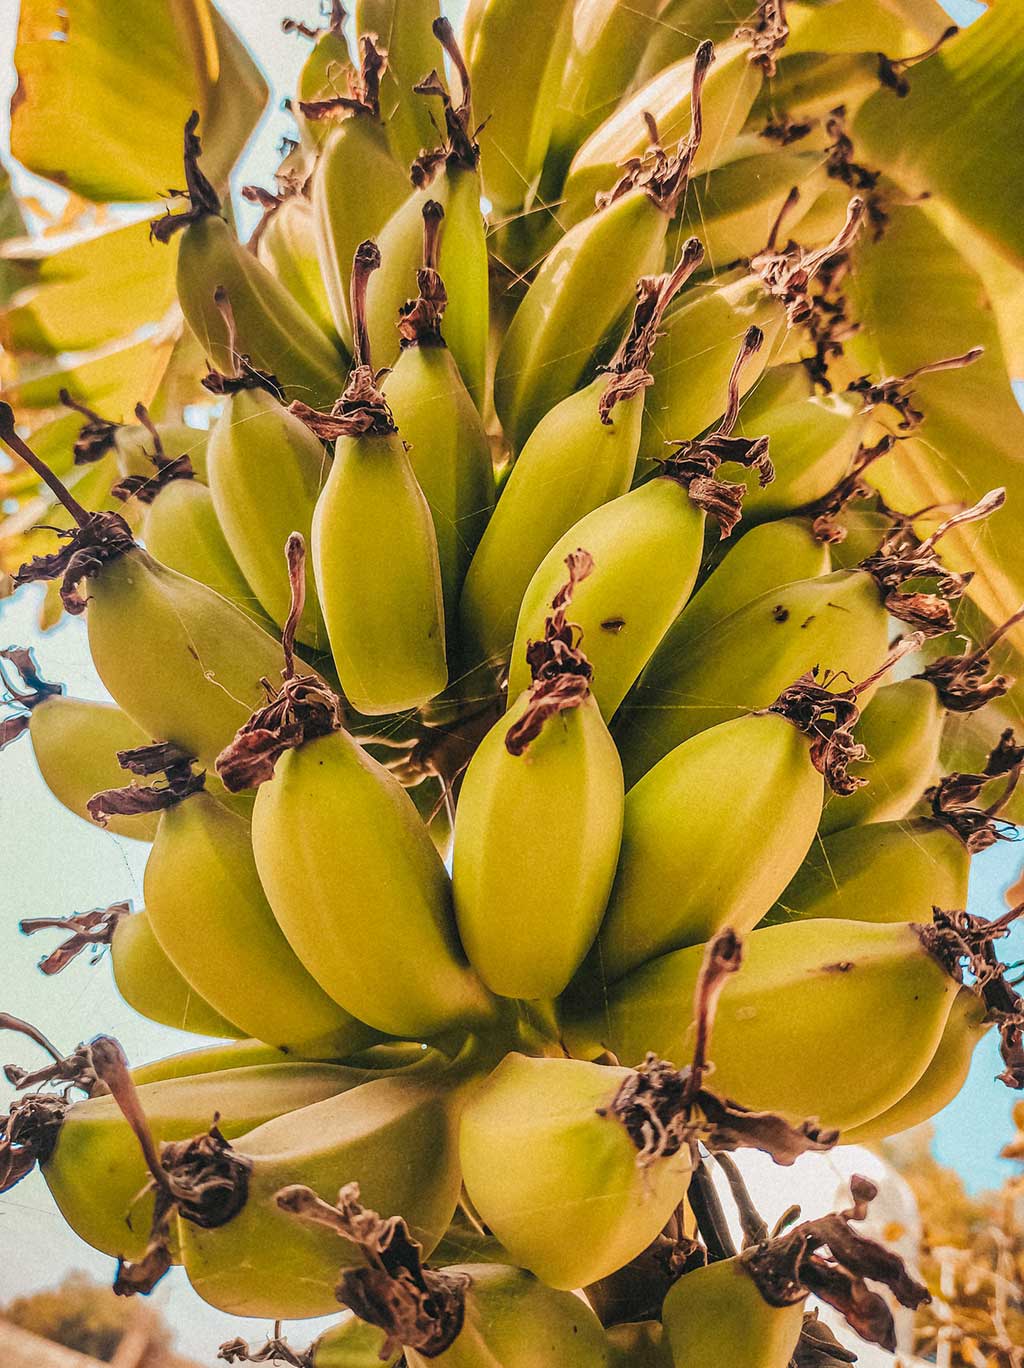 drive-swim-fly-hawaii-big-island-farm-tour-kokoleka-lani-farms-banana-tree-photo-by-gajanand-malethiya-pixabay